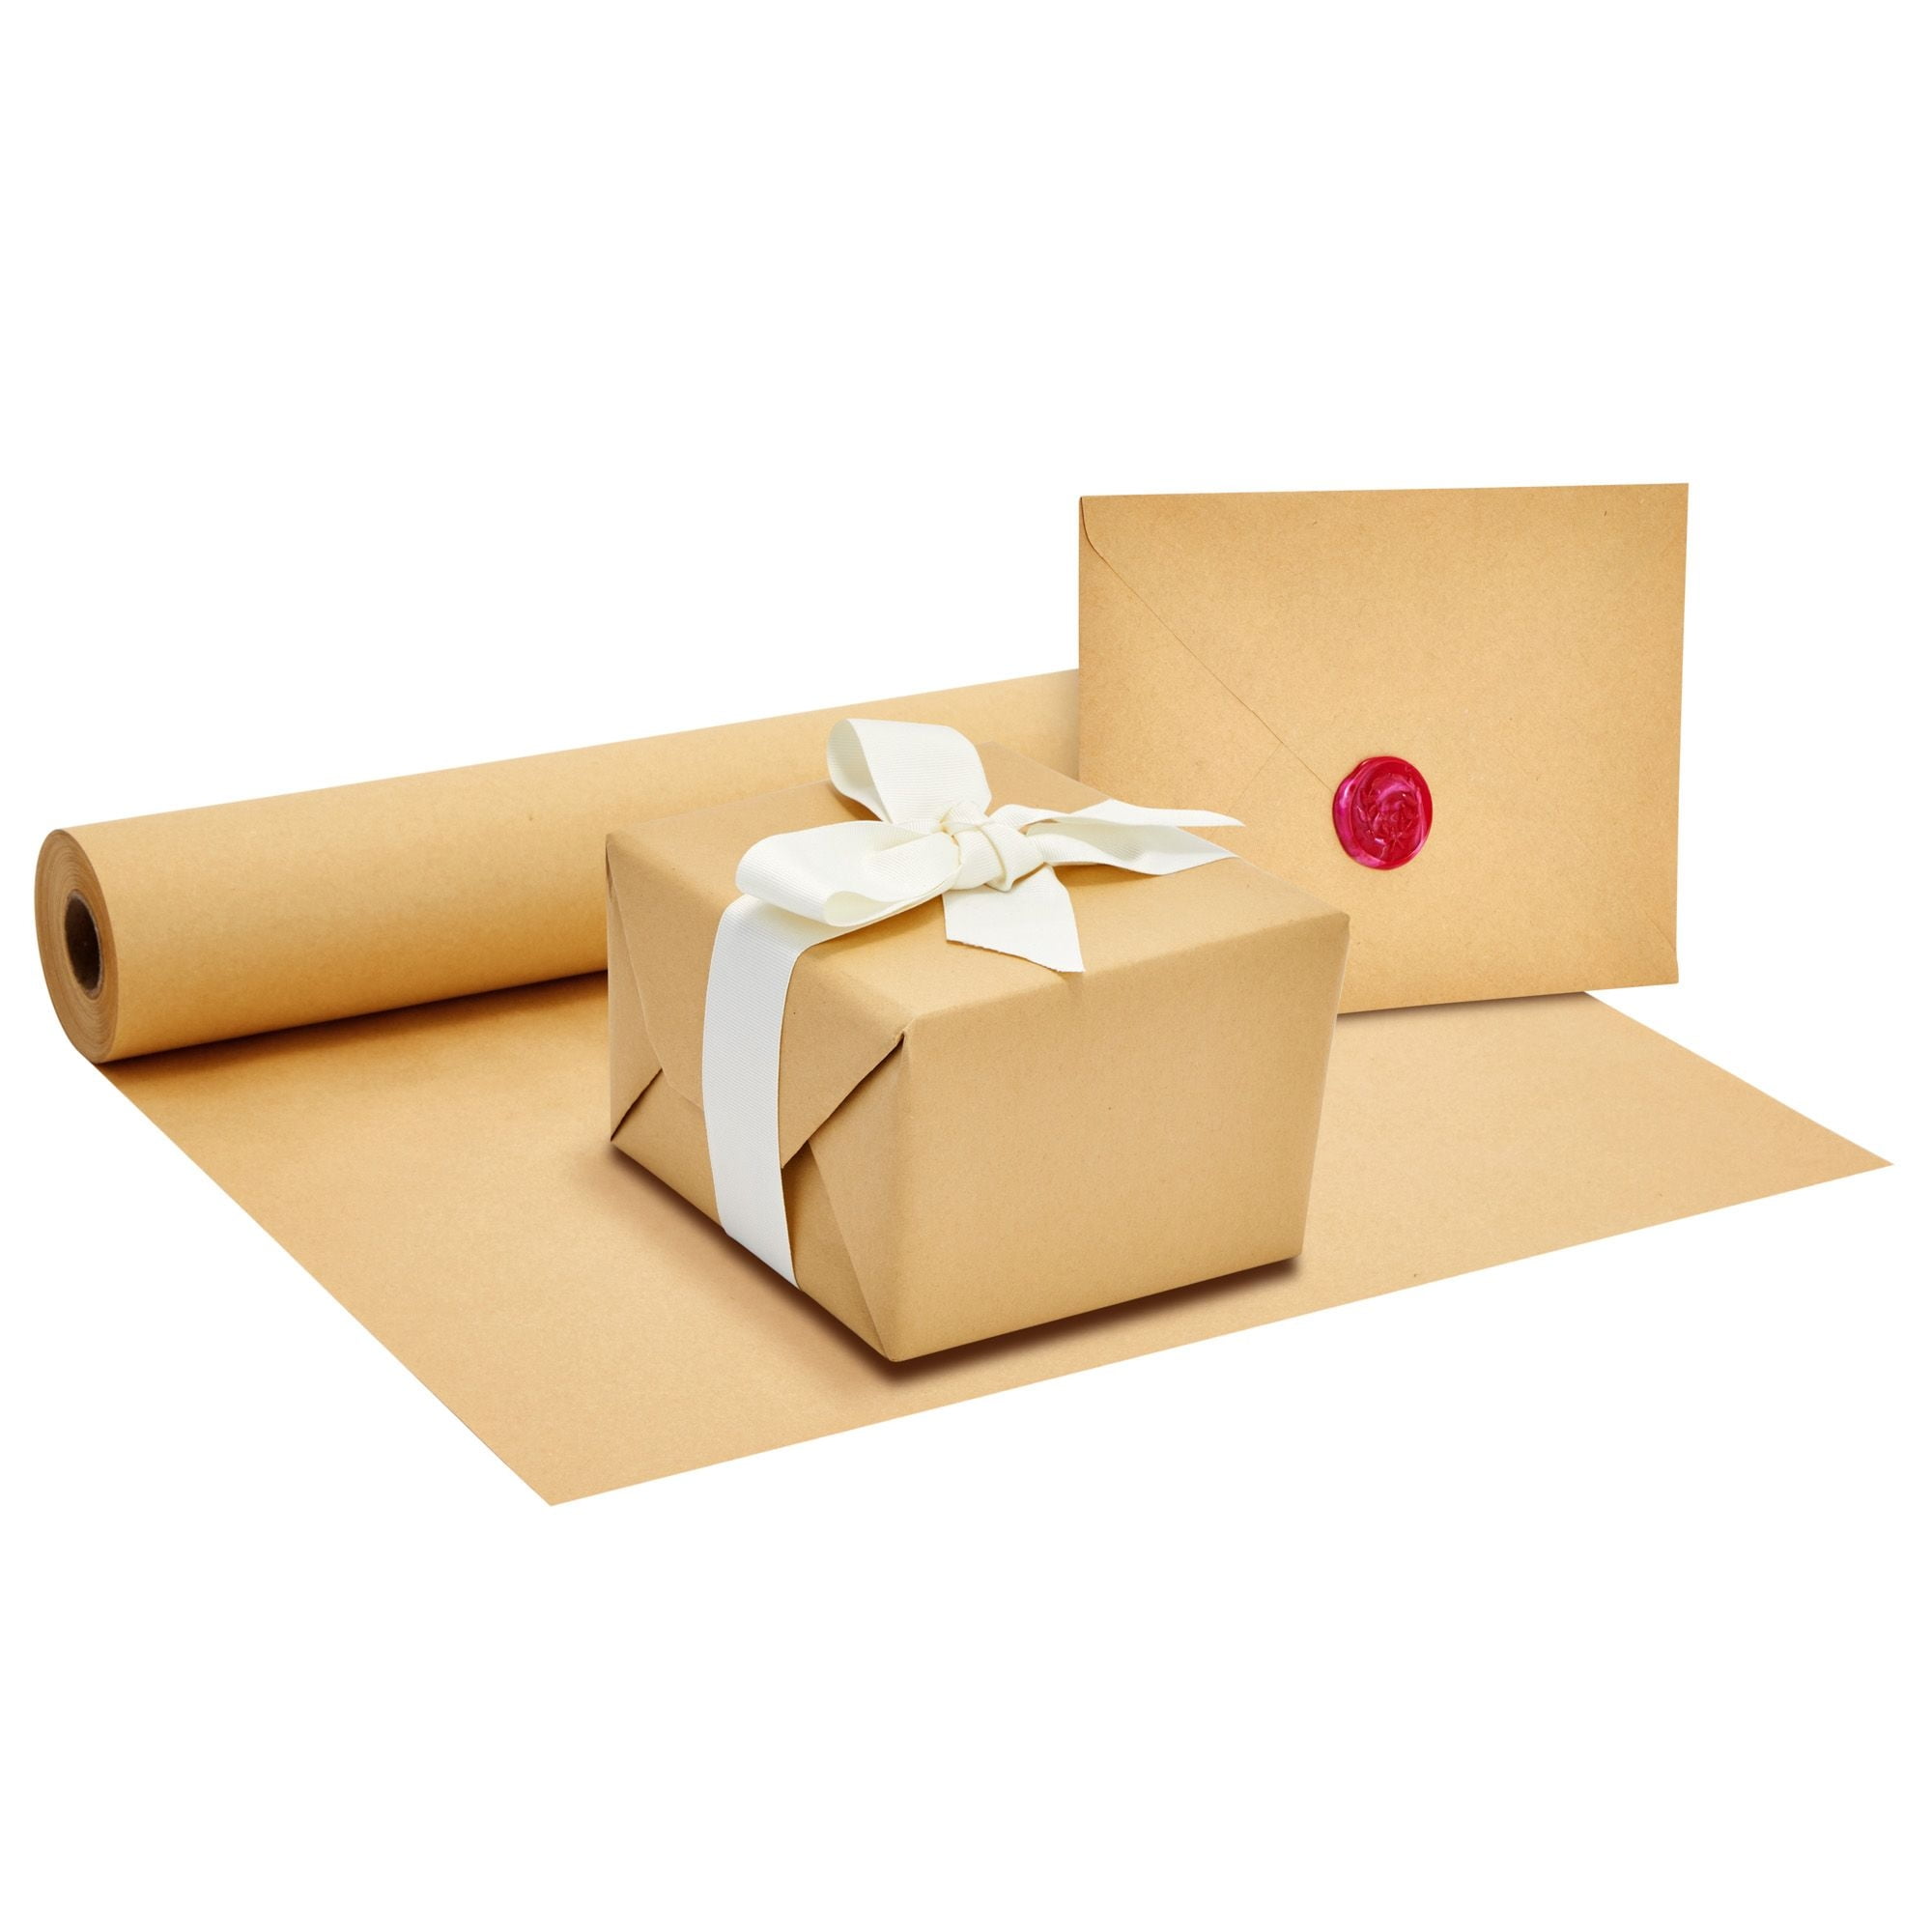 Kraft Paper Roll 17.5 x 100 Feet (1200 In), Plain Brown Shipping